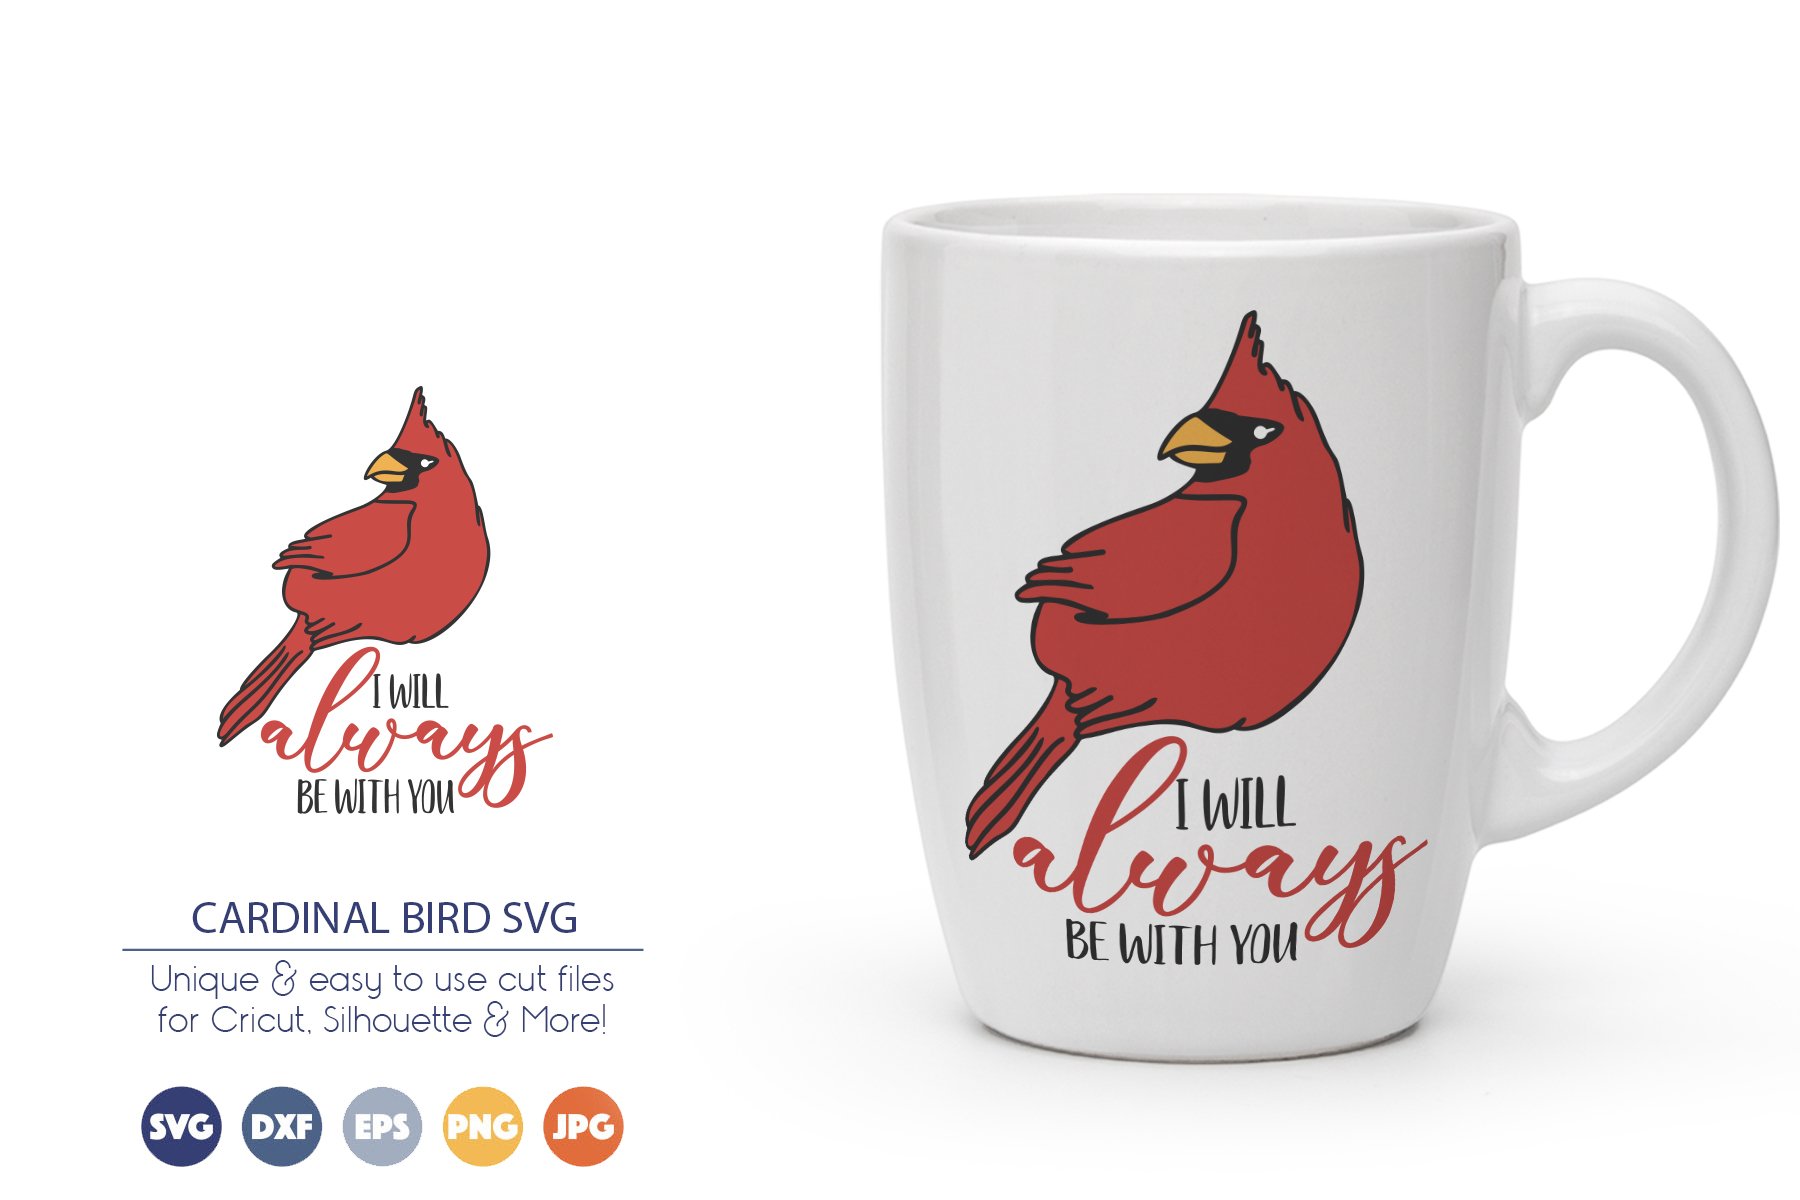 Coffee mug with a cardinal bird on it.